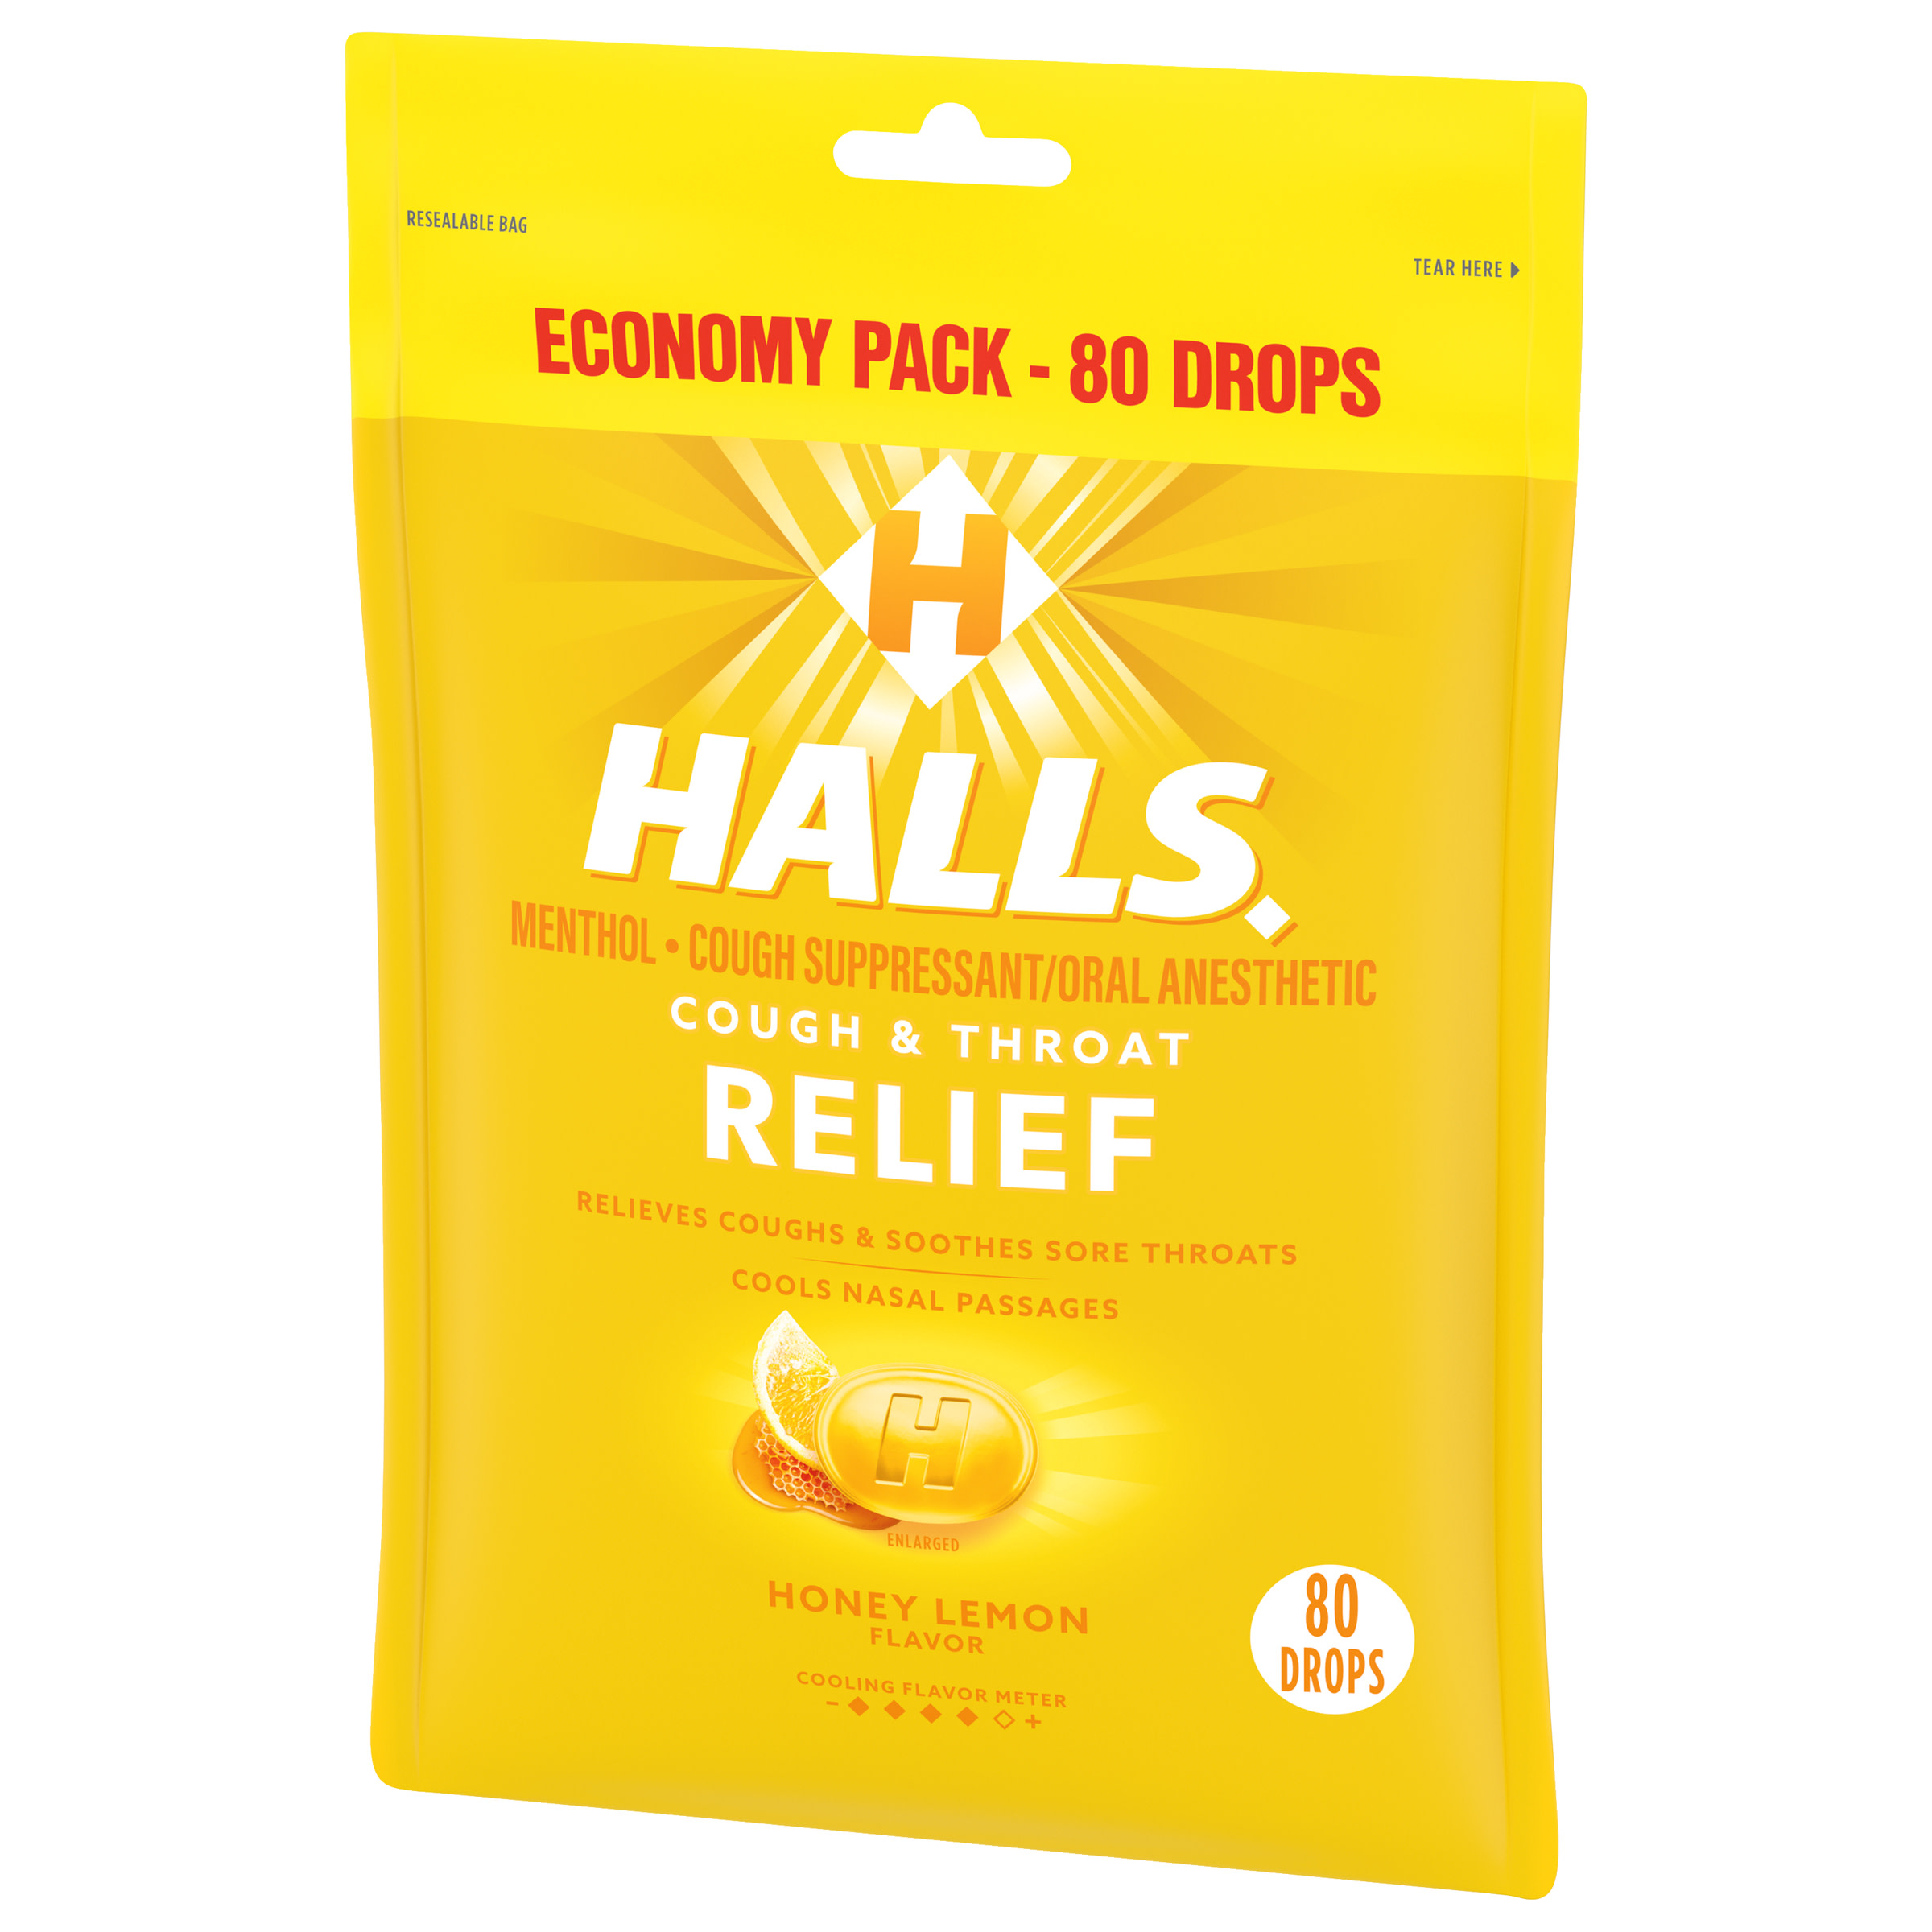 HALLS Relief Honey Lemon Cough Drops, Economy Pack, 80 Drops - image 10 of 12